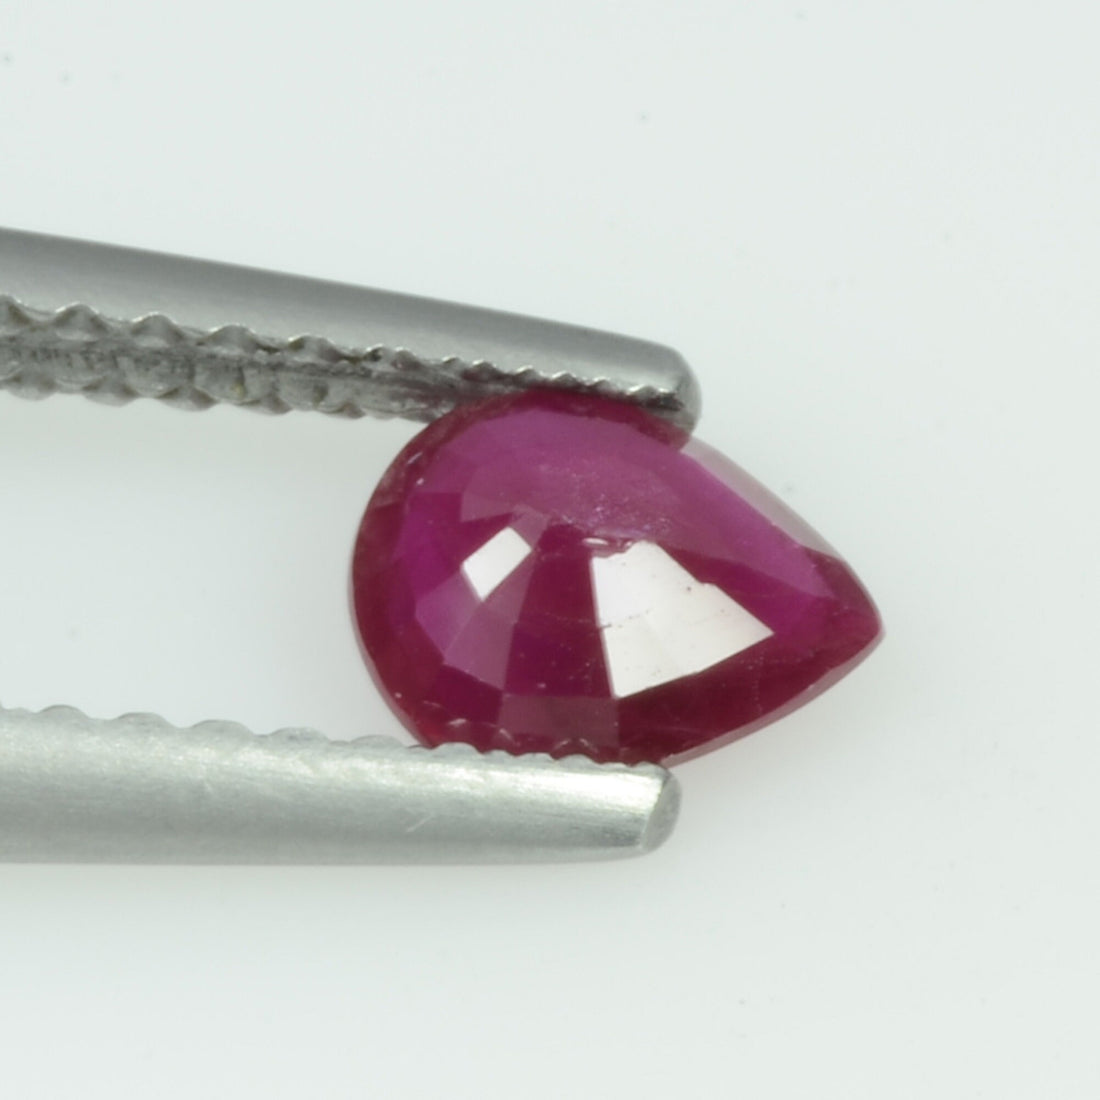 0.57 Cts Natural Burma Ruby Loose Gemstone Pear Cut